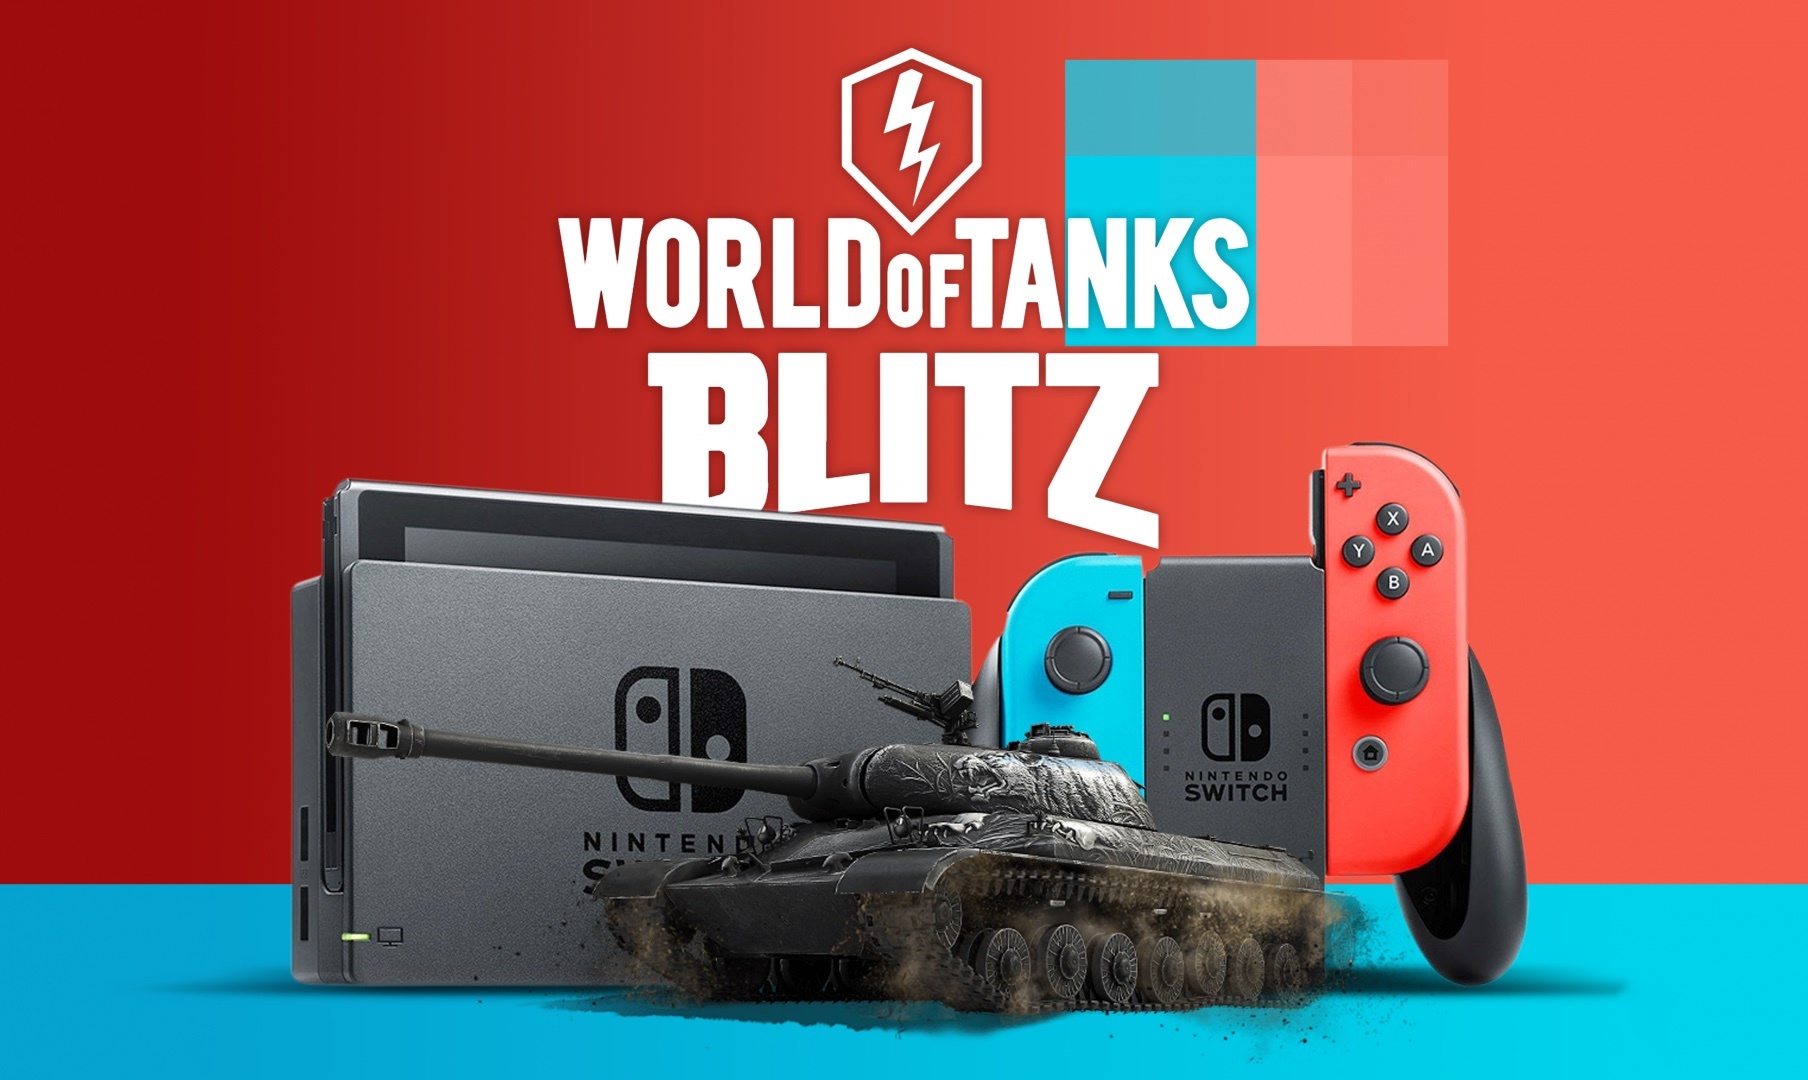  World of Tanks     Nintendo Switch  